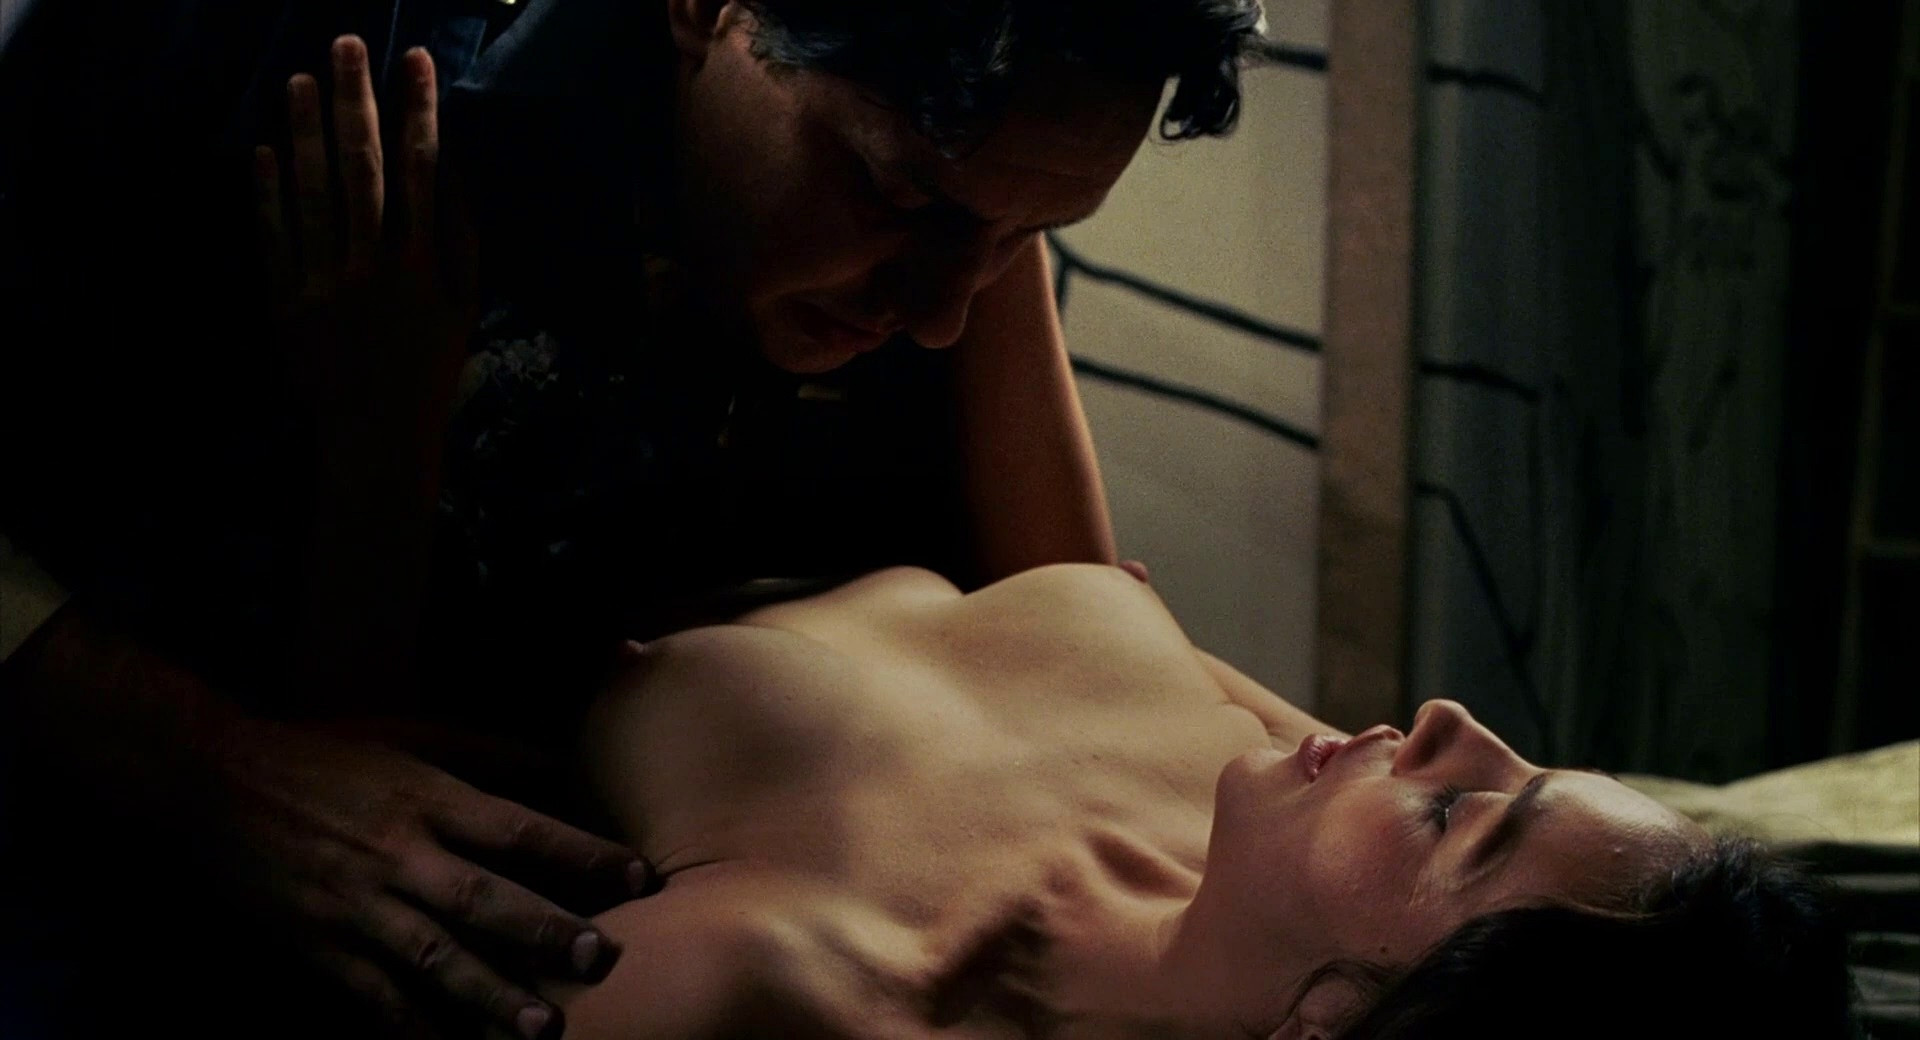 Salma Hayek Hot Sex & Lesbian Scenes in "Frida" Movie. 